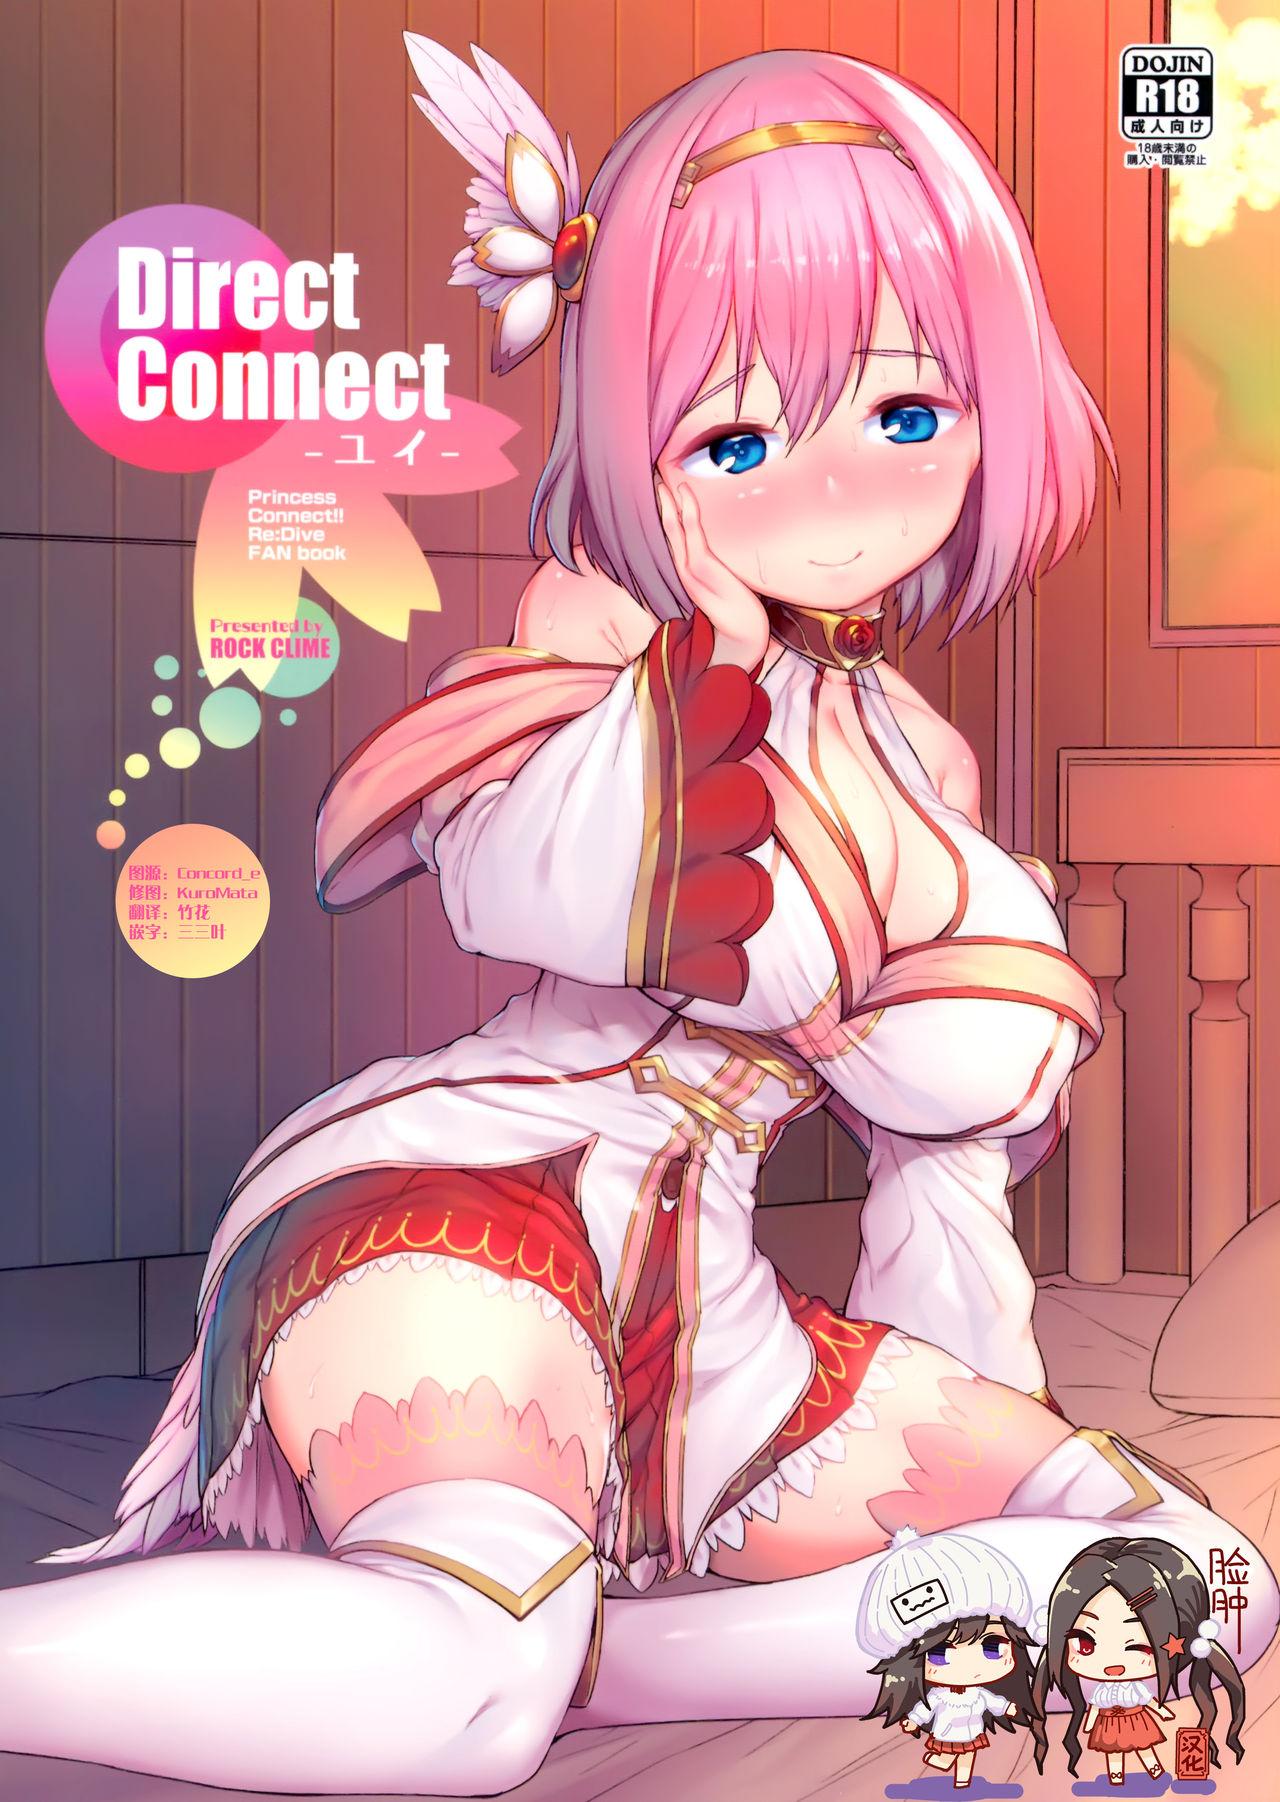 Vaginal Direct Connect - Princess connect Erotica - Picture 1